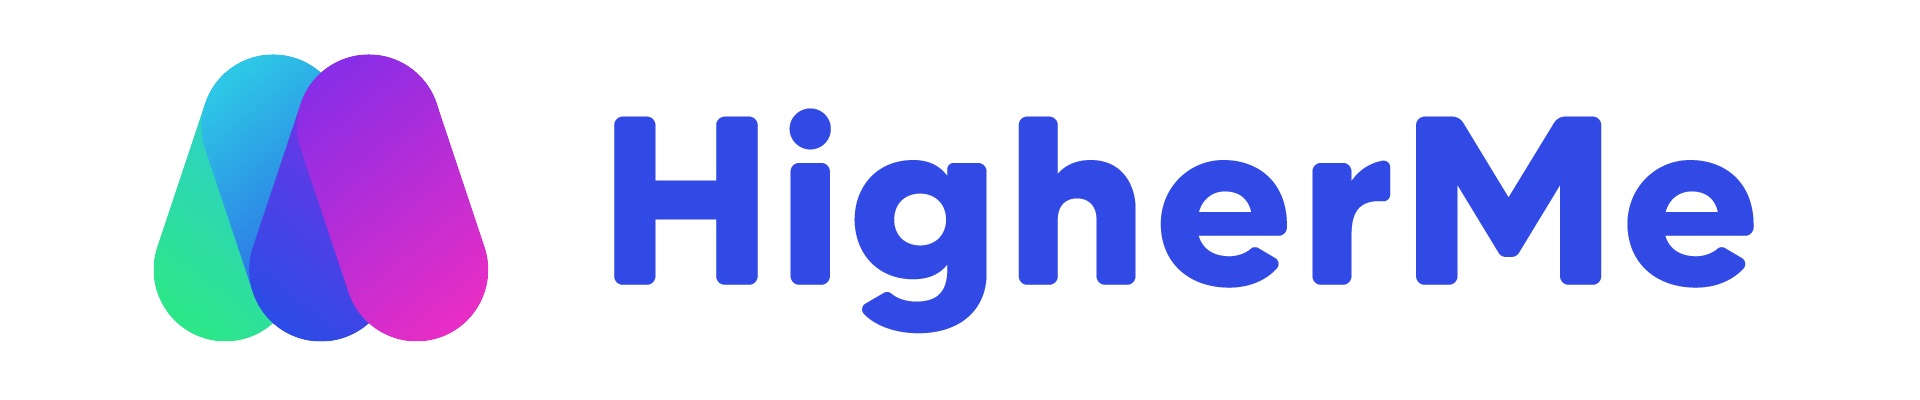 HigherMe-logo-color__1_